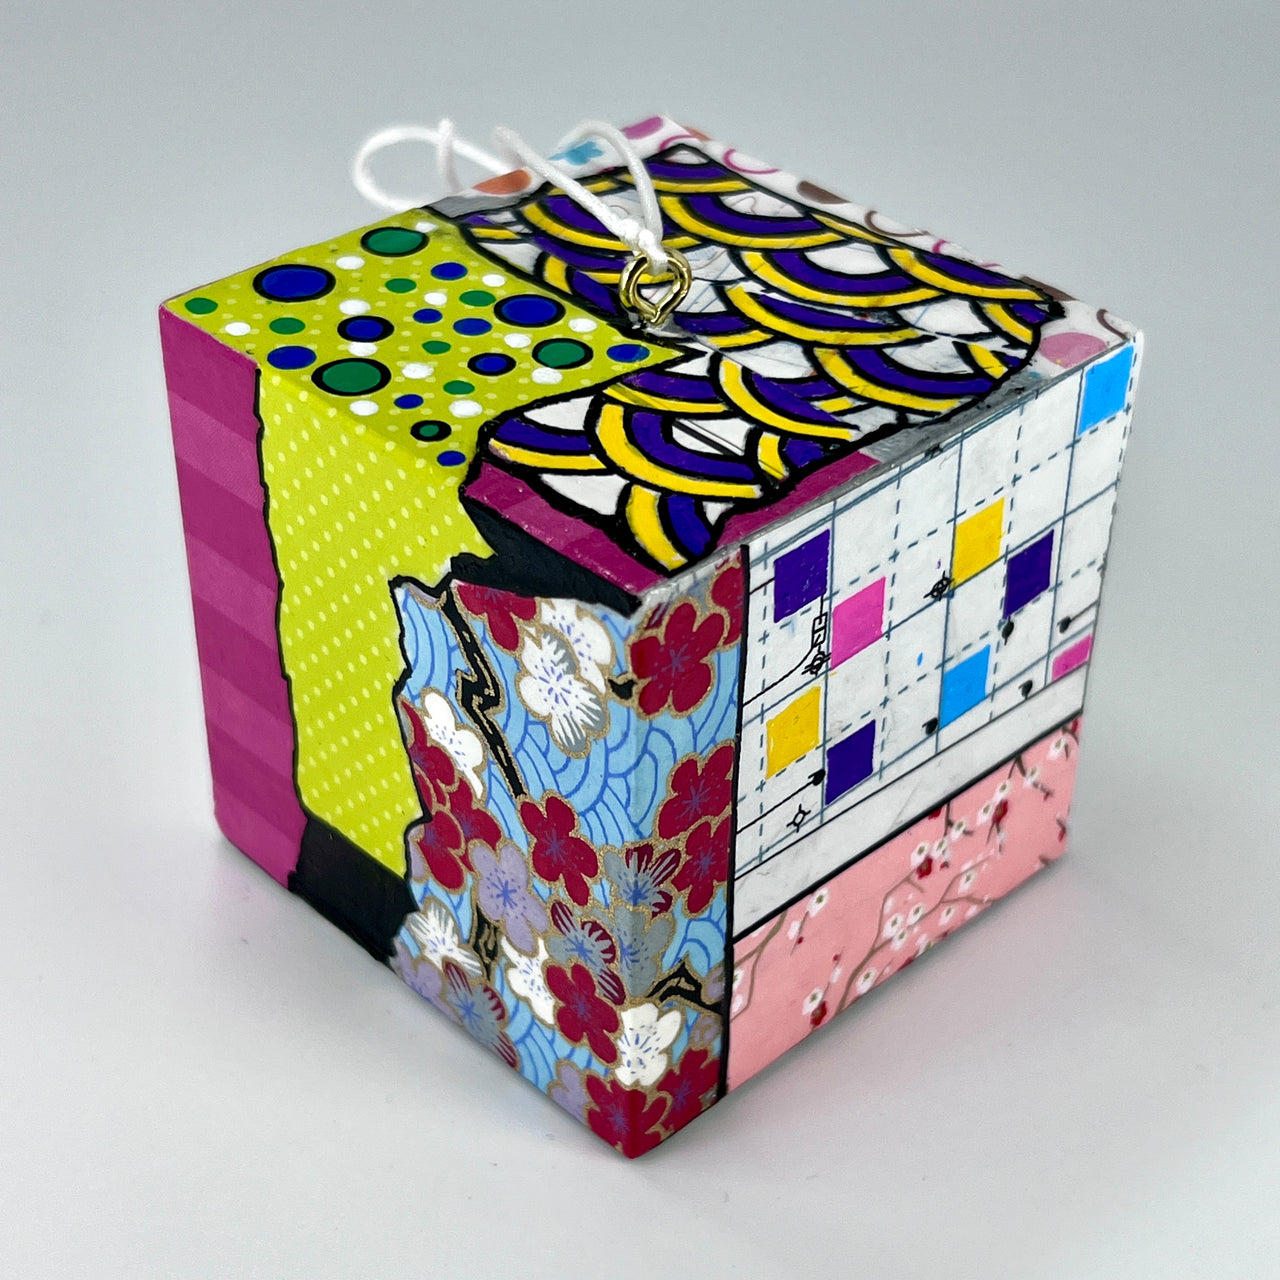 #11 - 3D Cube Art - 2.25" cube